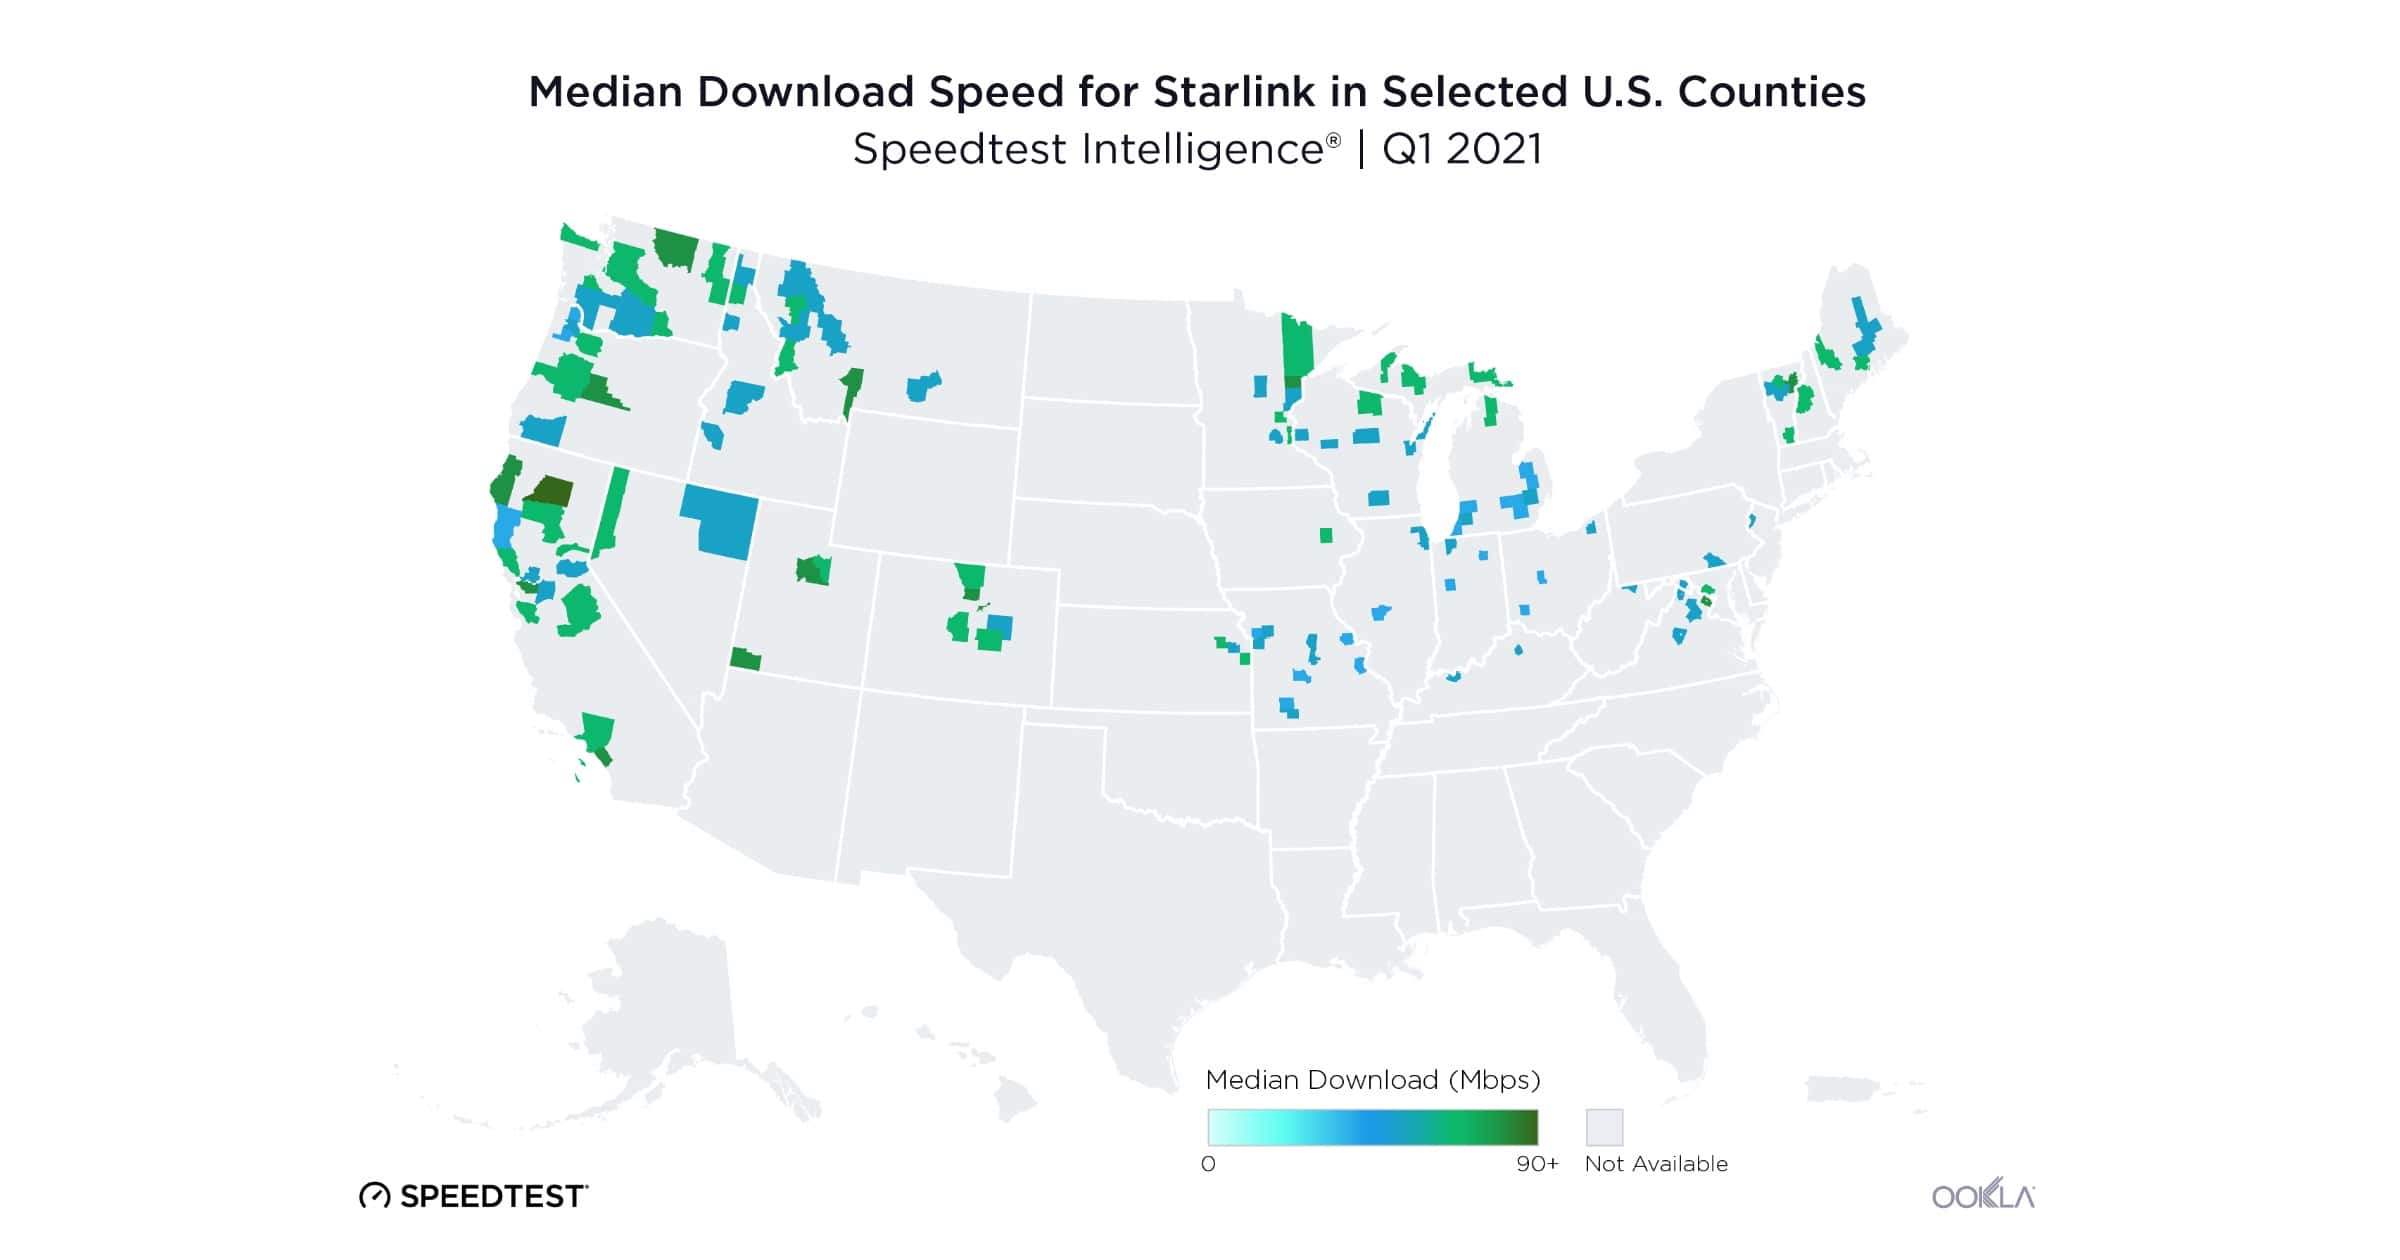 Median download speed for Starlink in US